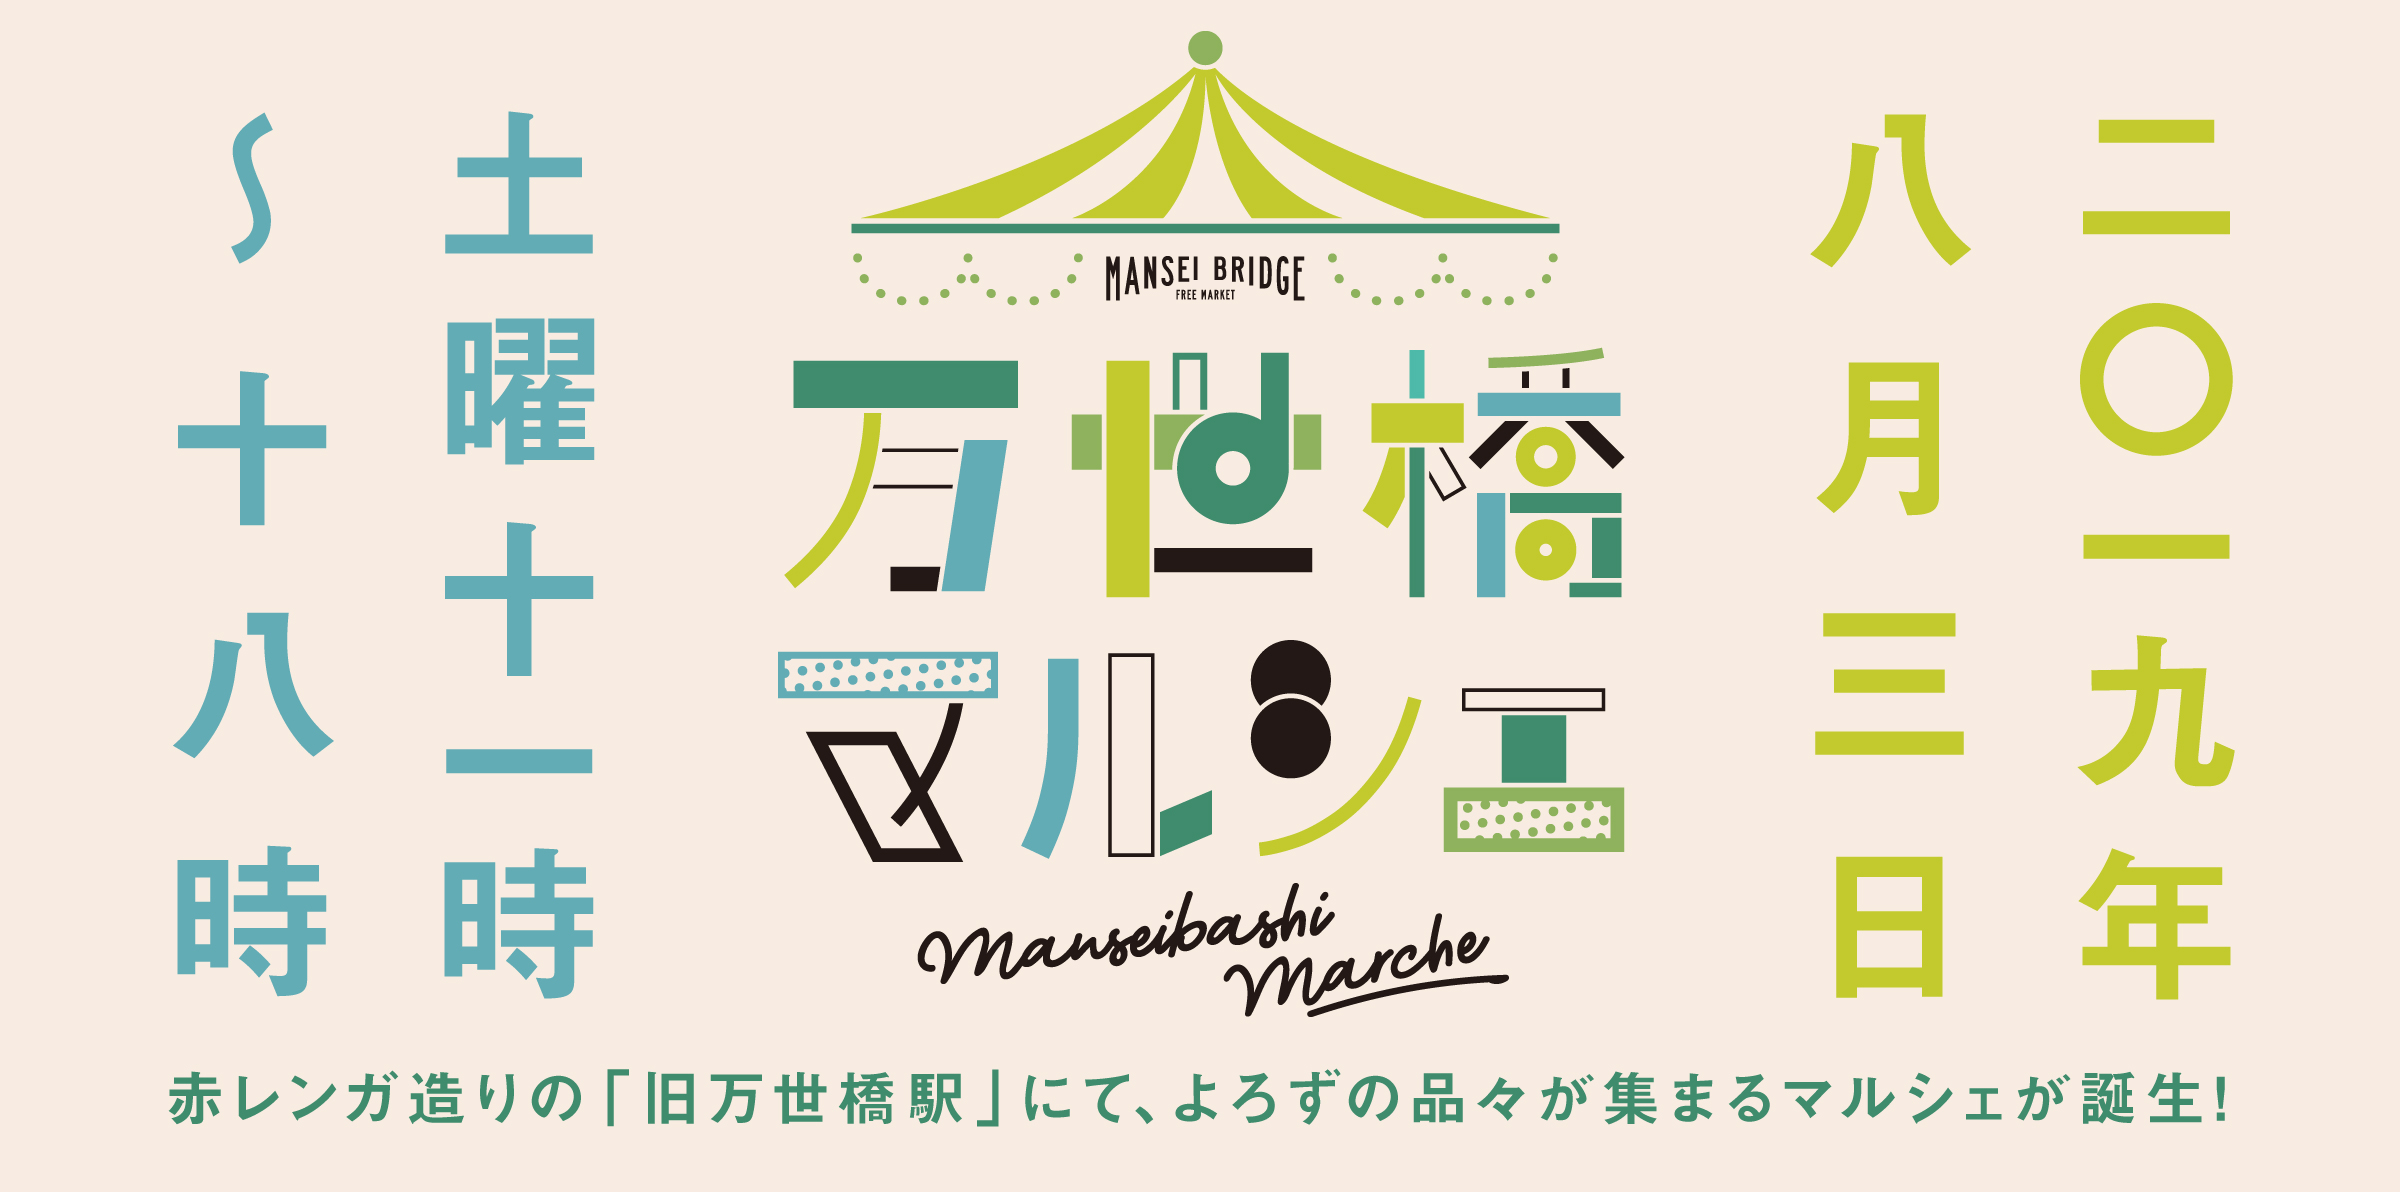 Manseibashi marche consumer hp 08